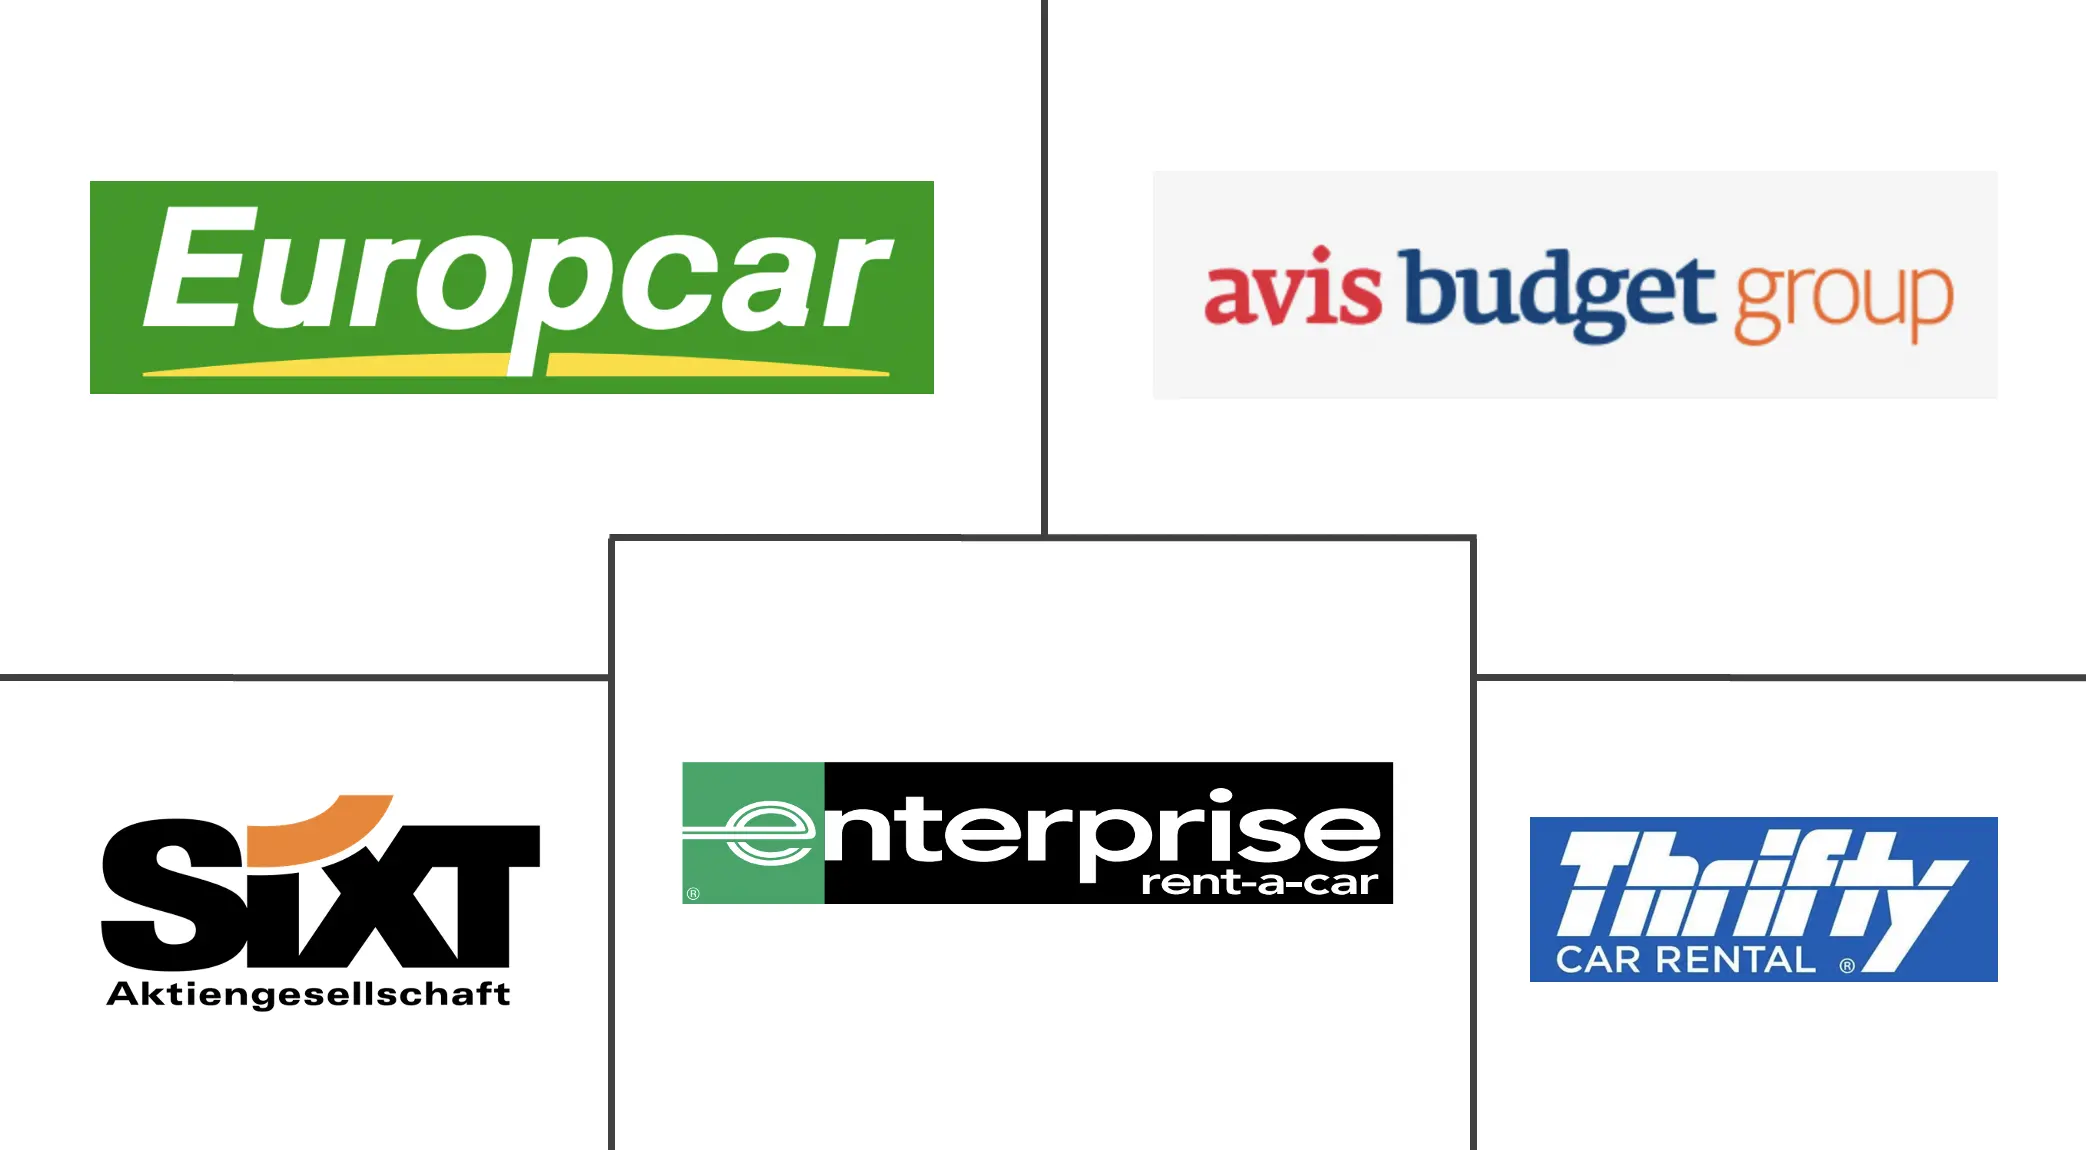 europe vehicle rental market key players